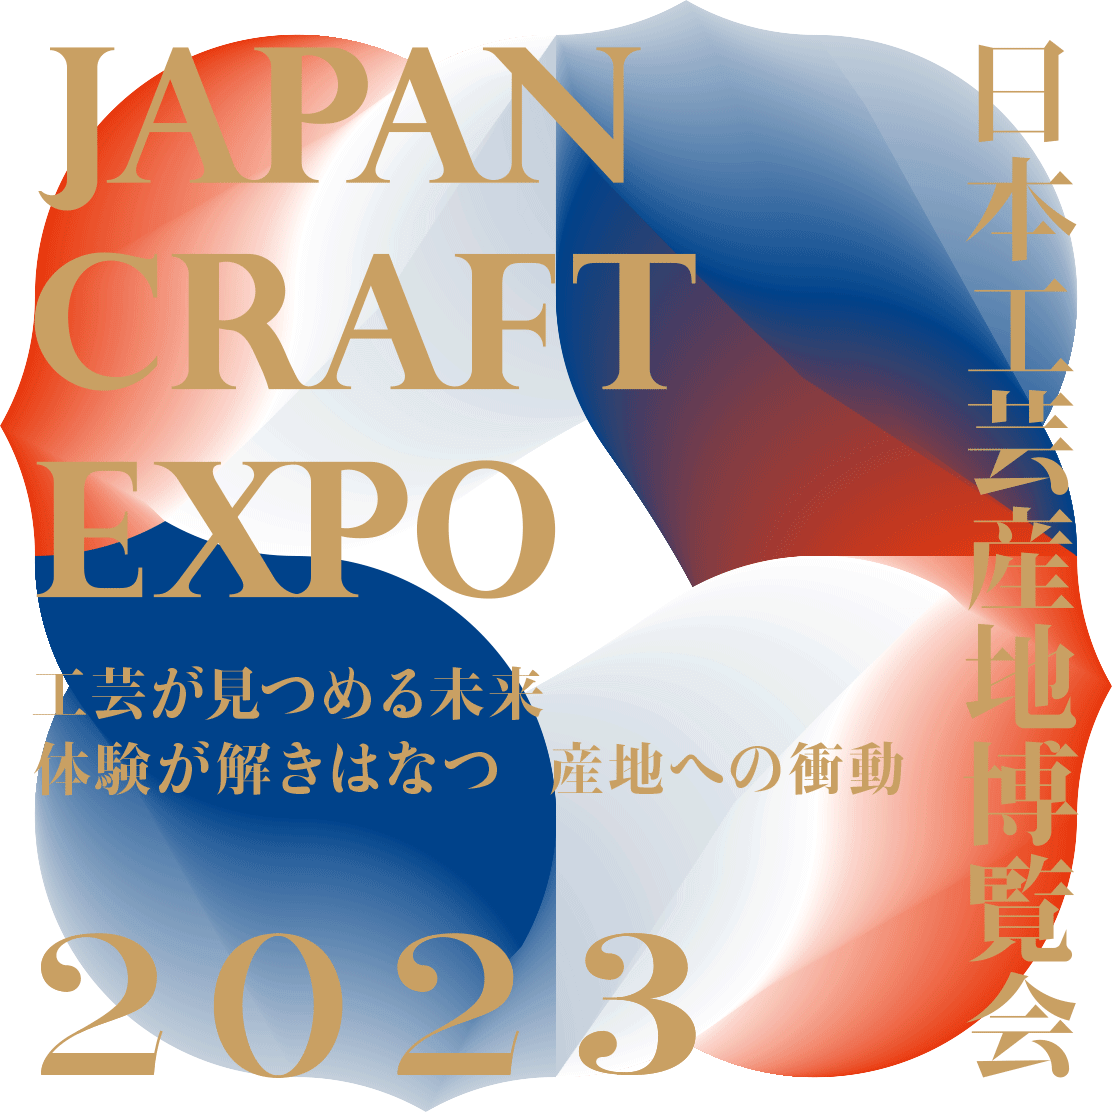 日本工芸産地博覧会 JAPAN CRAFT EXPO